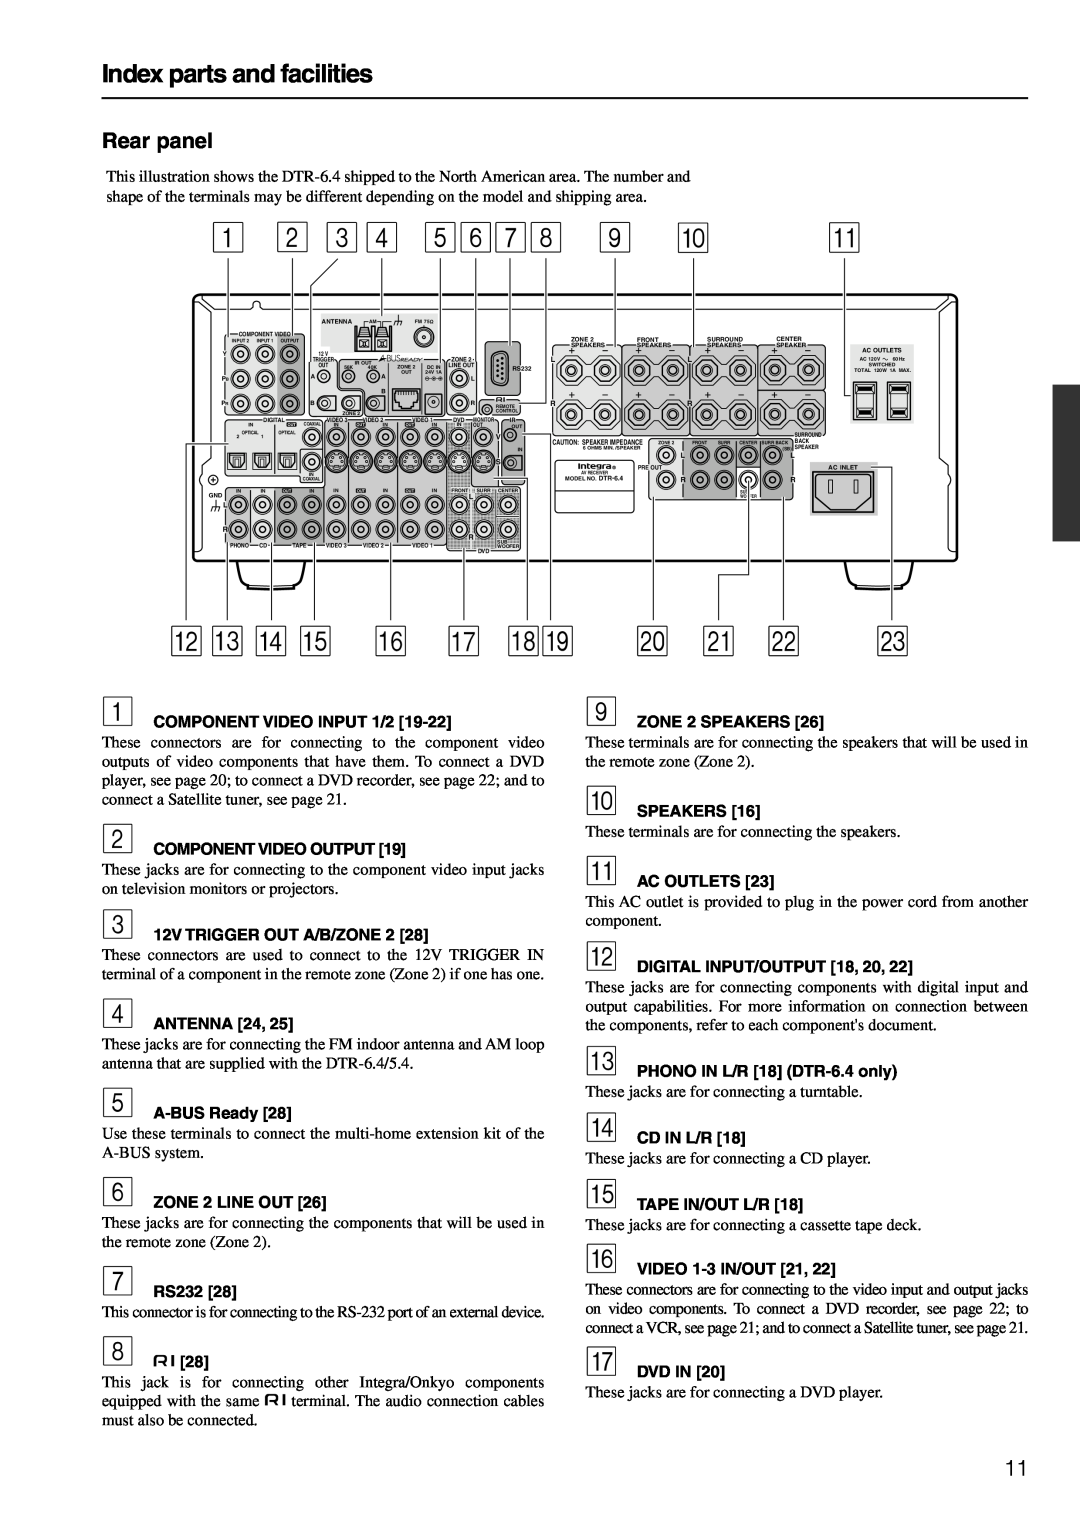 Integra DTR-6.4/5.4 instruction manual Rear panel, Index parts and facilities 